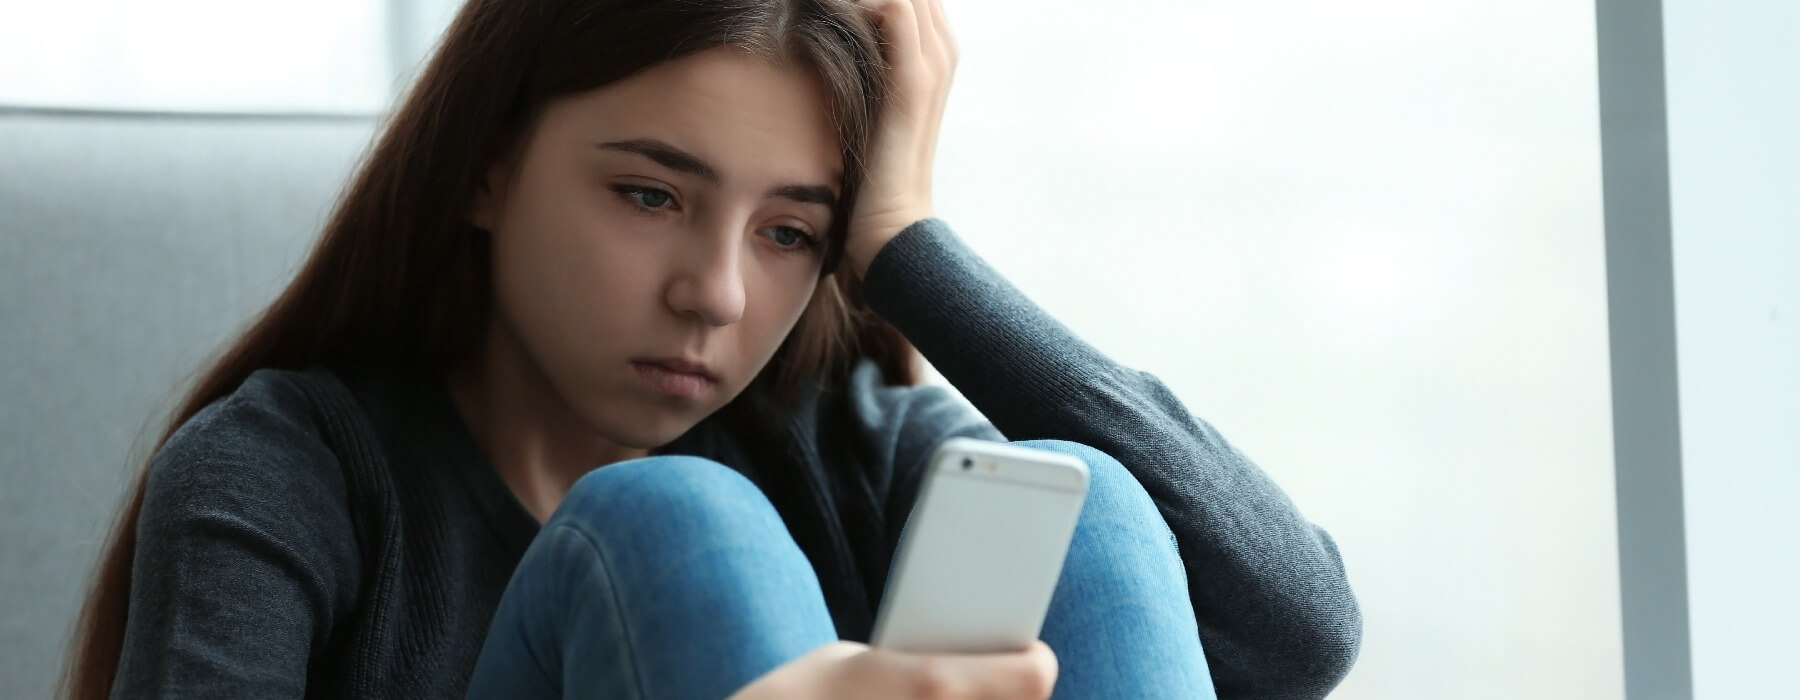 sad teen girl looking at phone cyberbullying